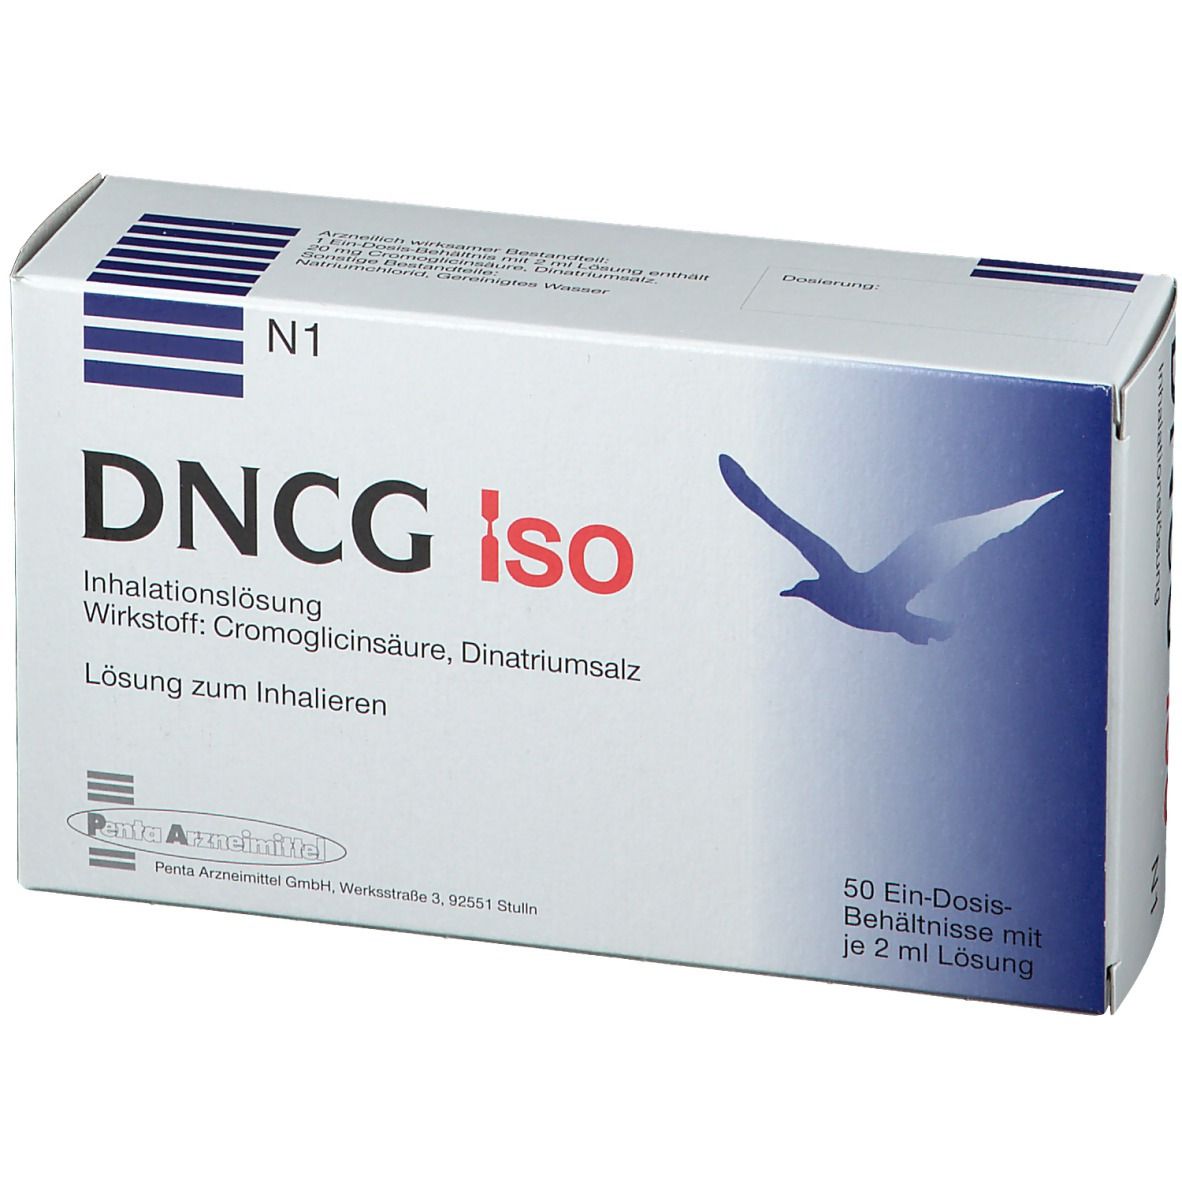 DNCG ISO Inhalationslösung